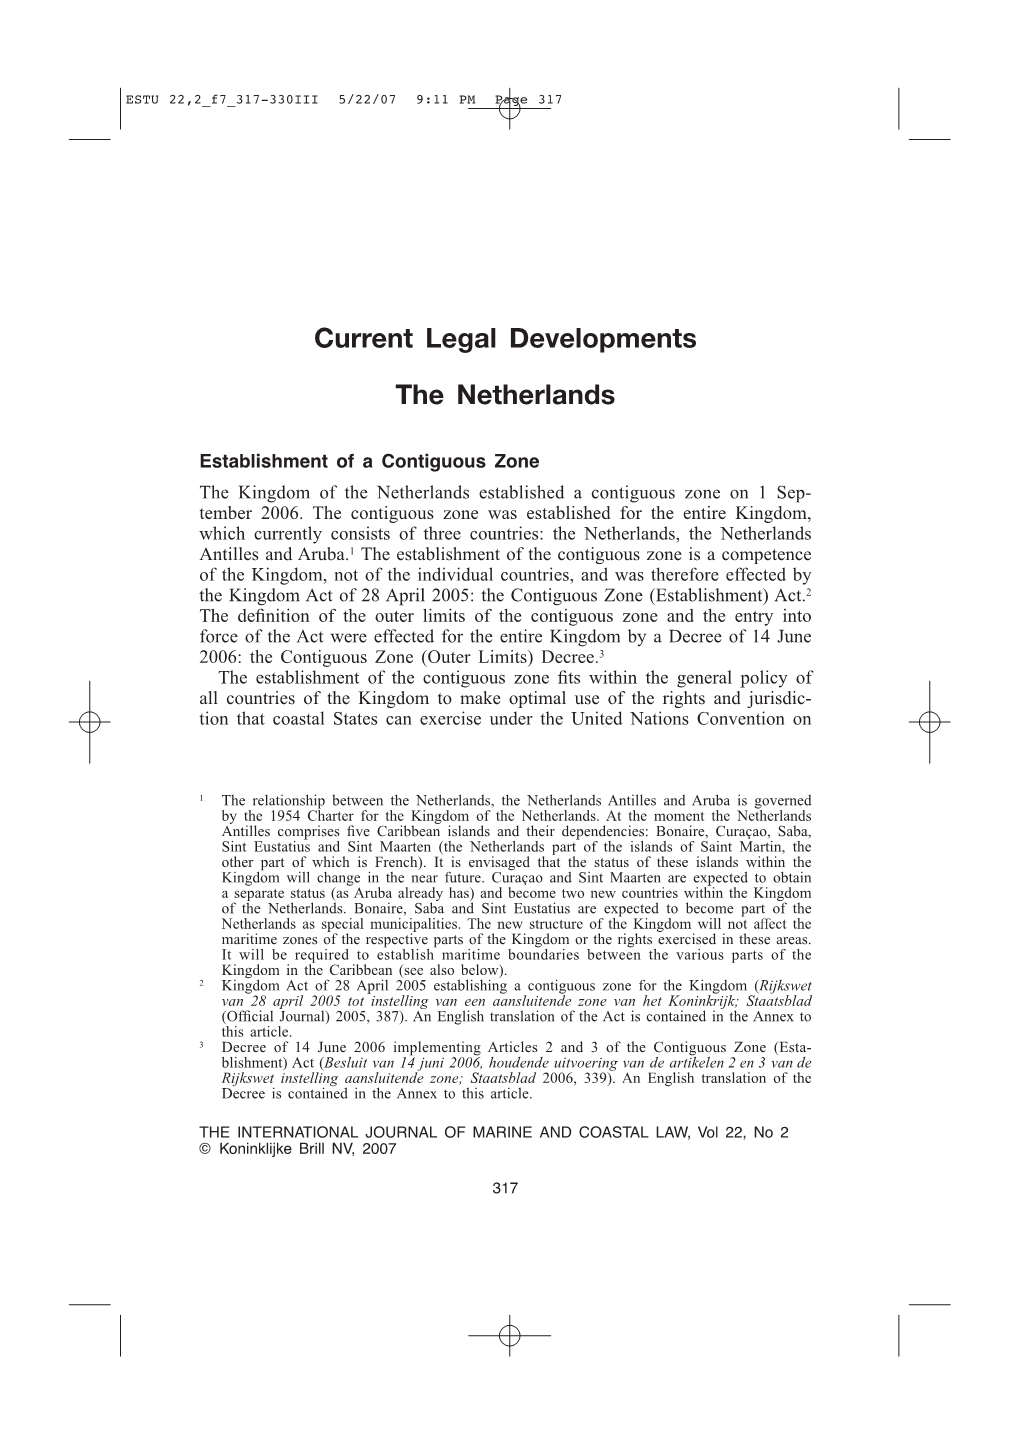 Current Legal Developments the Netherlands